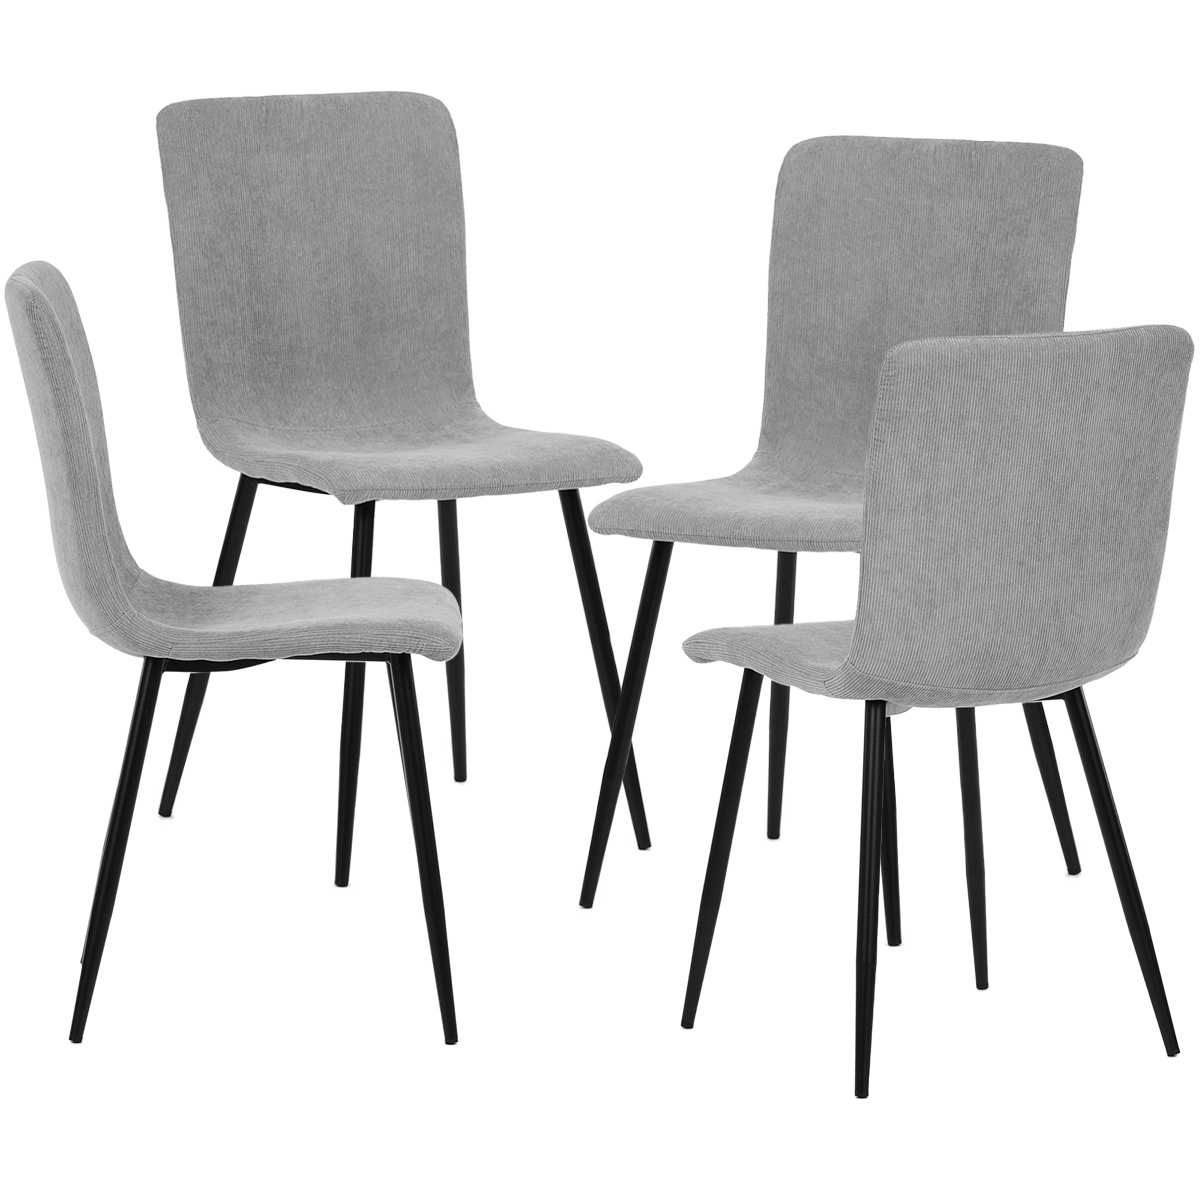 Fotografie Sada jídelních polstrovaných židlí 4 ks, šedá, 42 x 88 x 52 cm